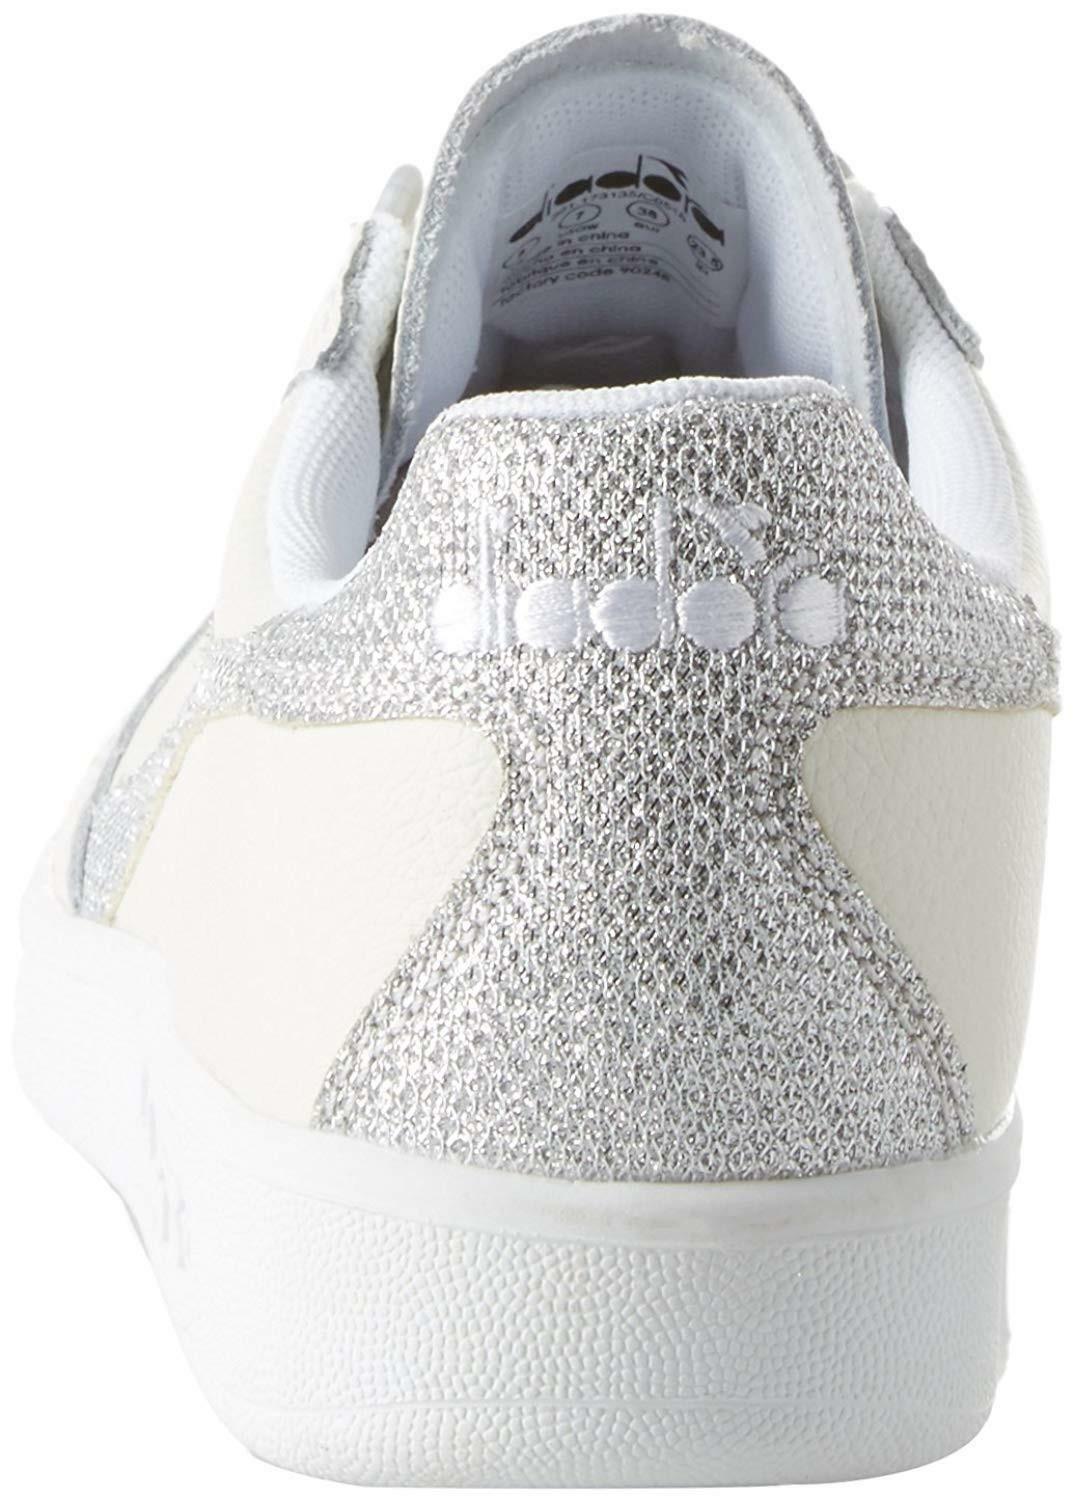 diadora diadora b.elite l scarpe sportive donna bianche argento 173135c0516